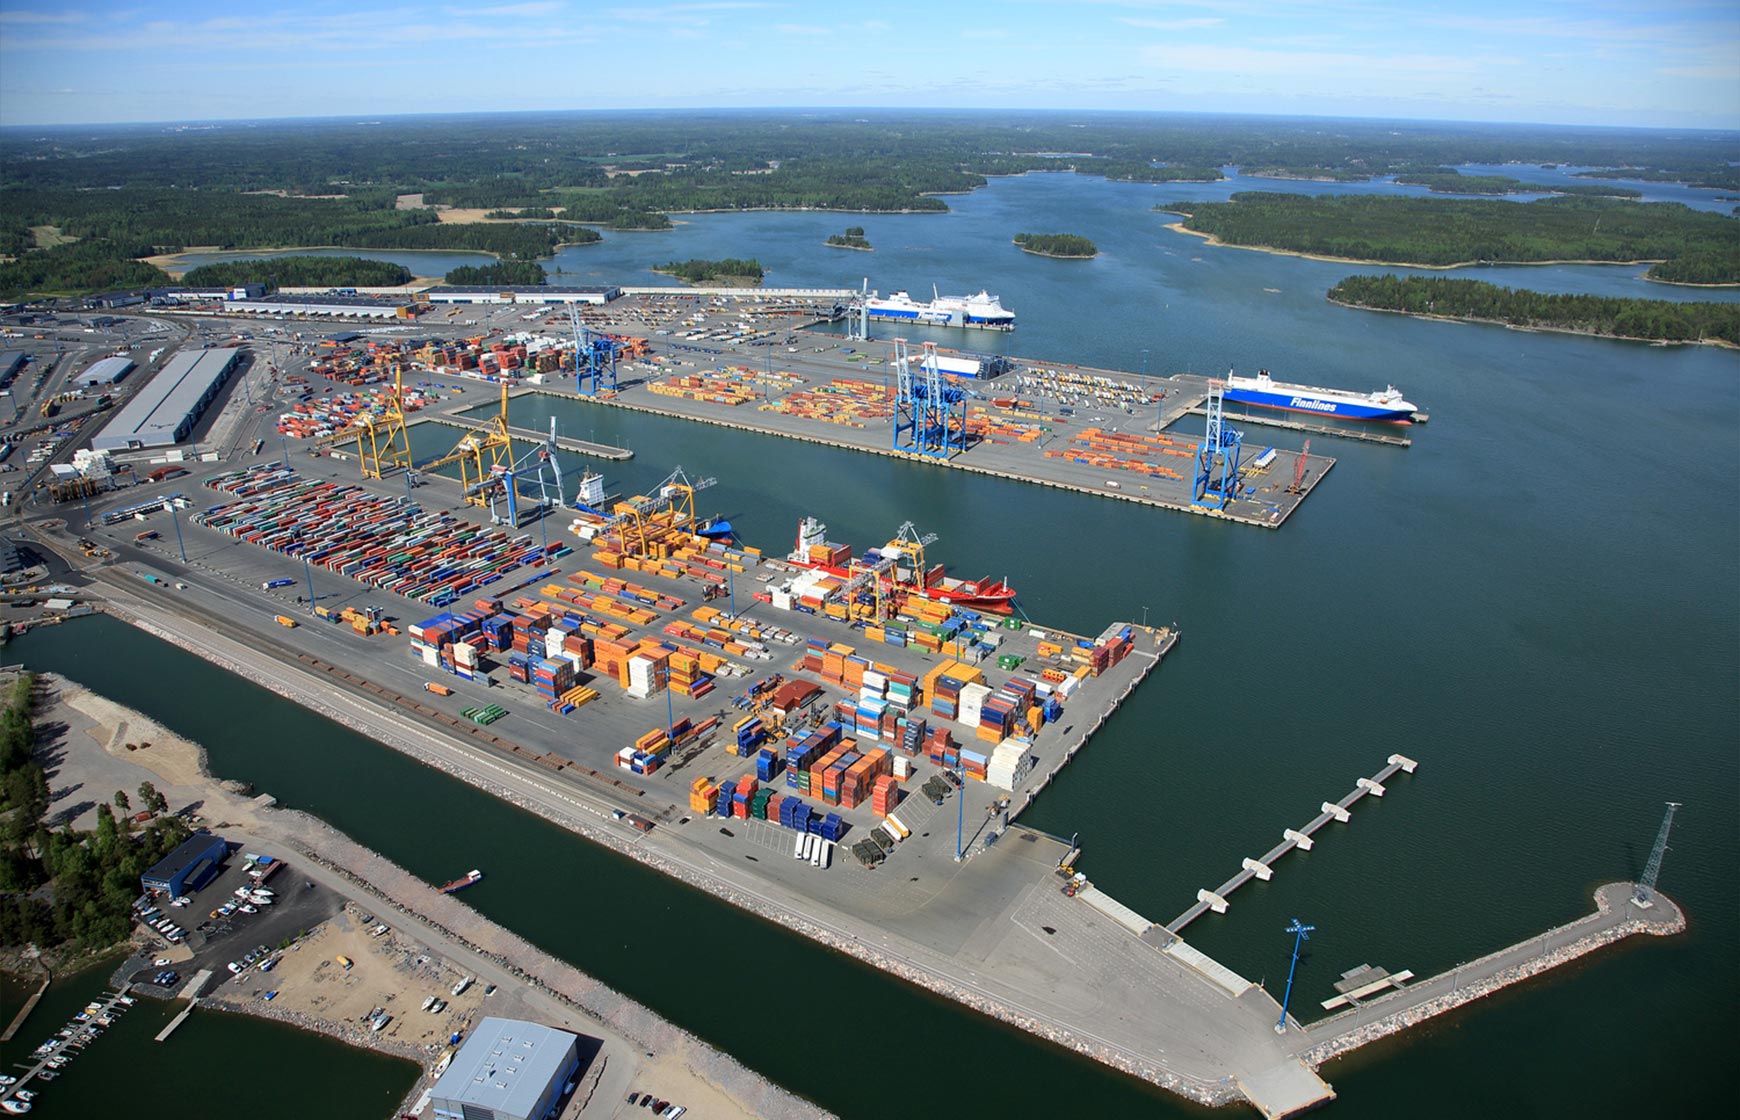 Larger cranes at APM Terminals Finnish terminals increase capacity and efficiency